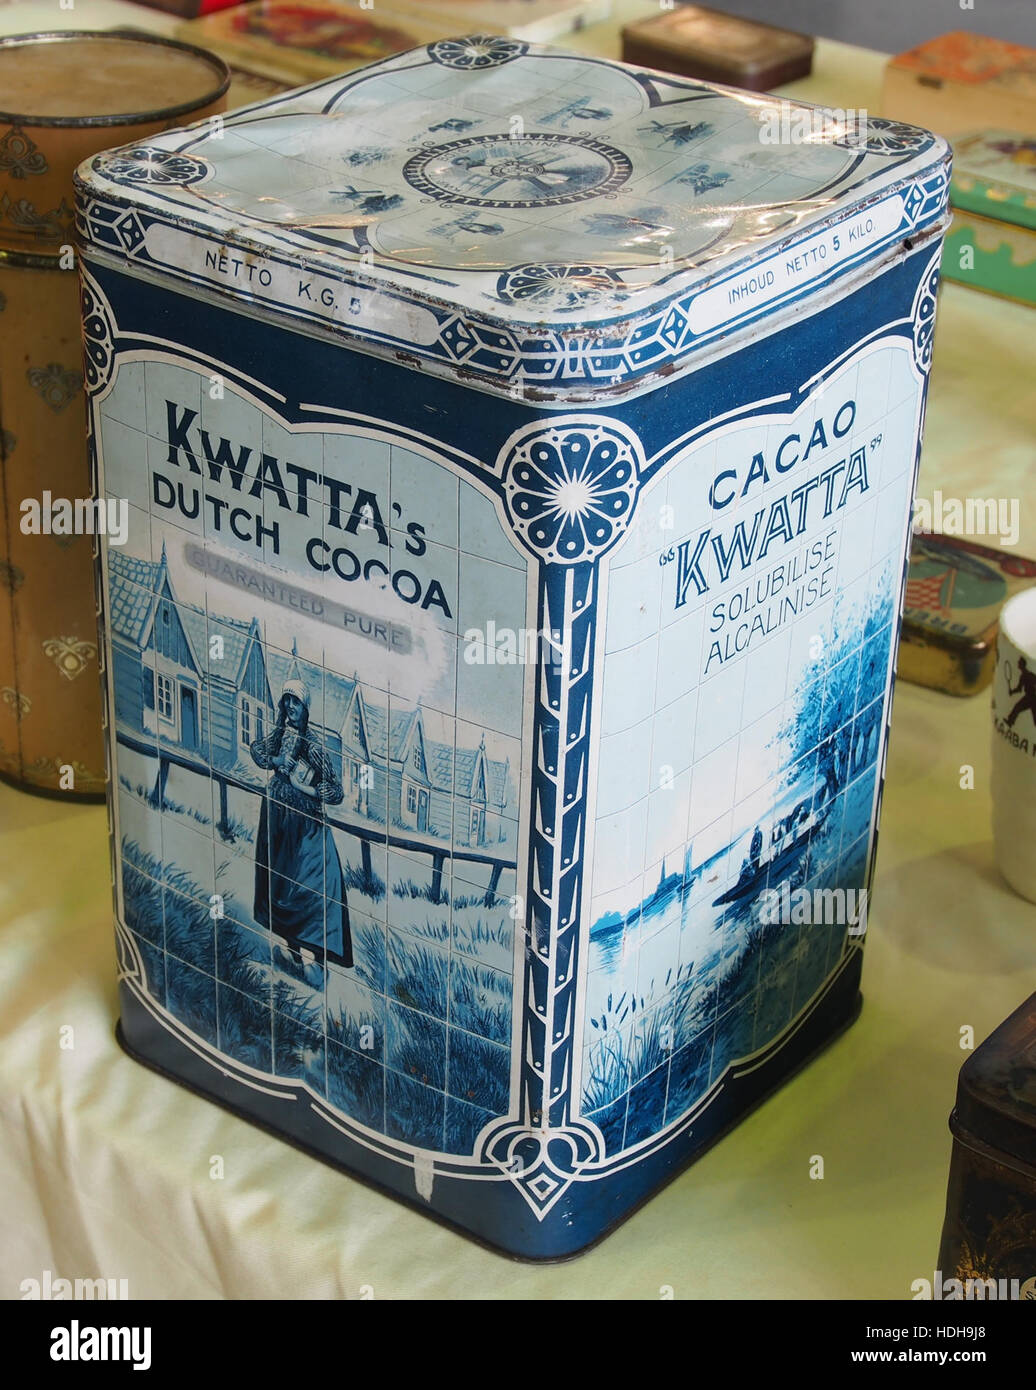 Kwattas dutch cocoa 5kg blik pic1 Stock Photo - Alamy